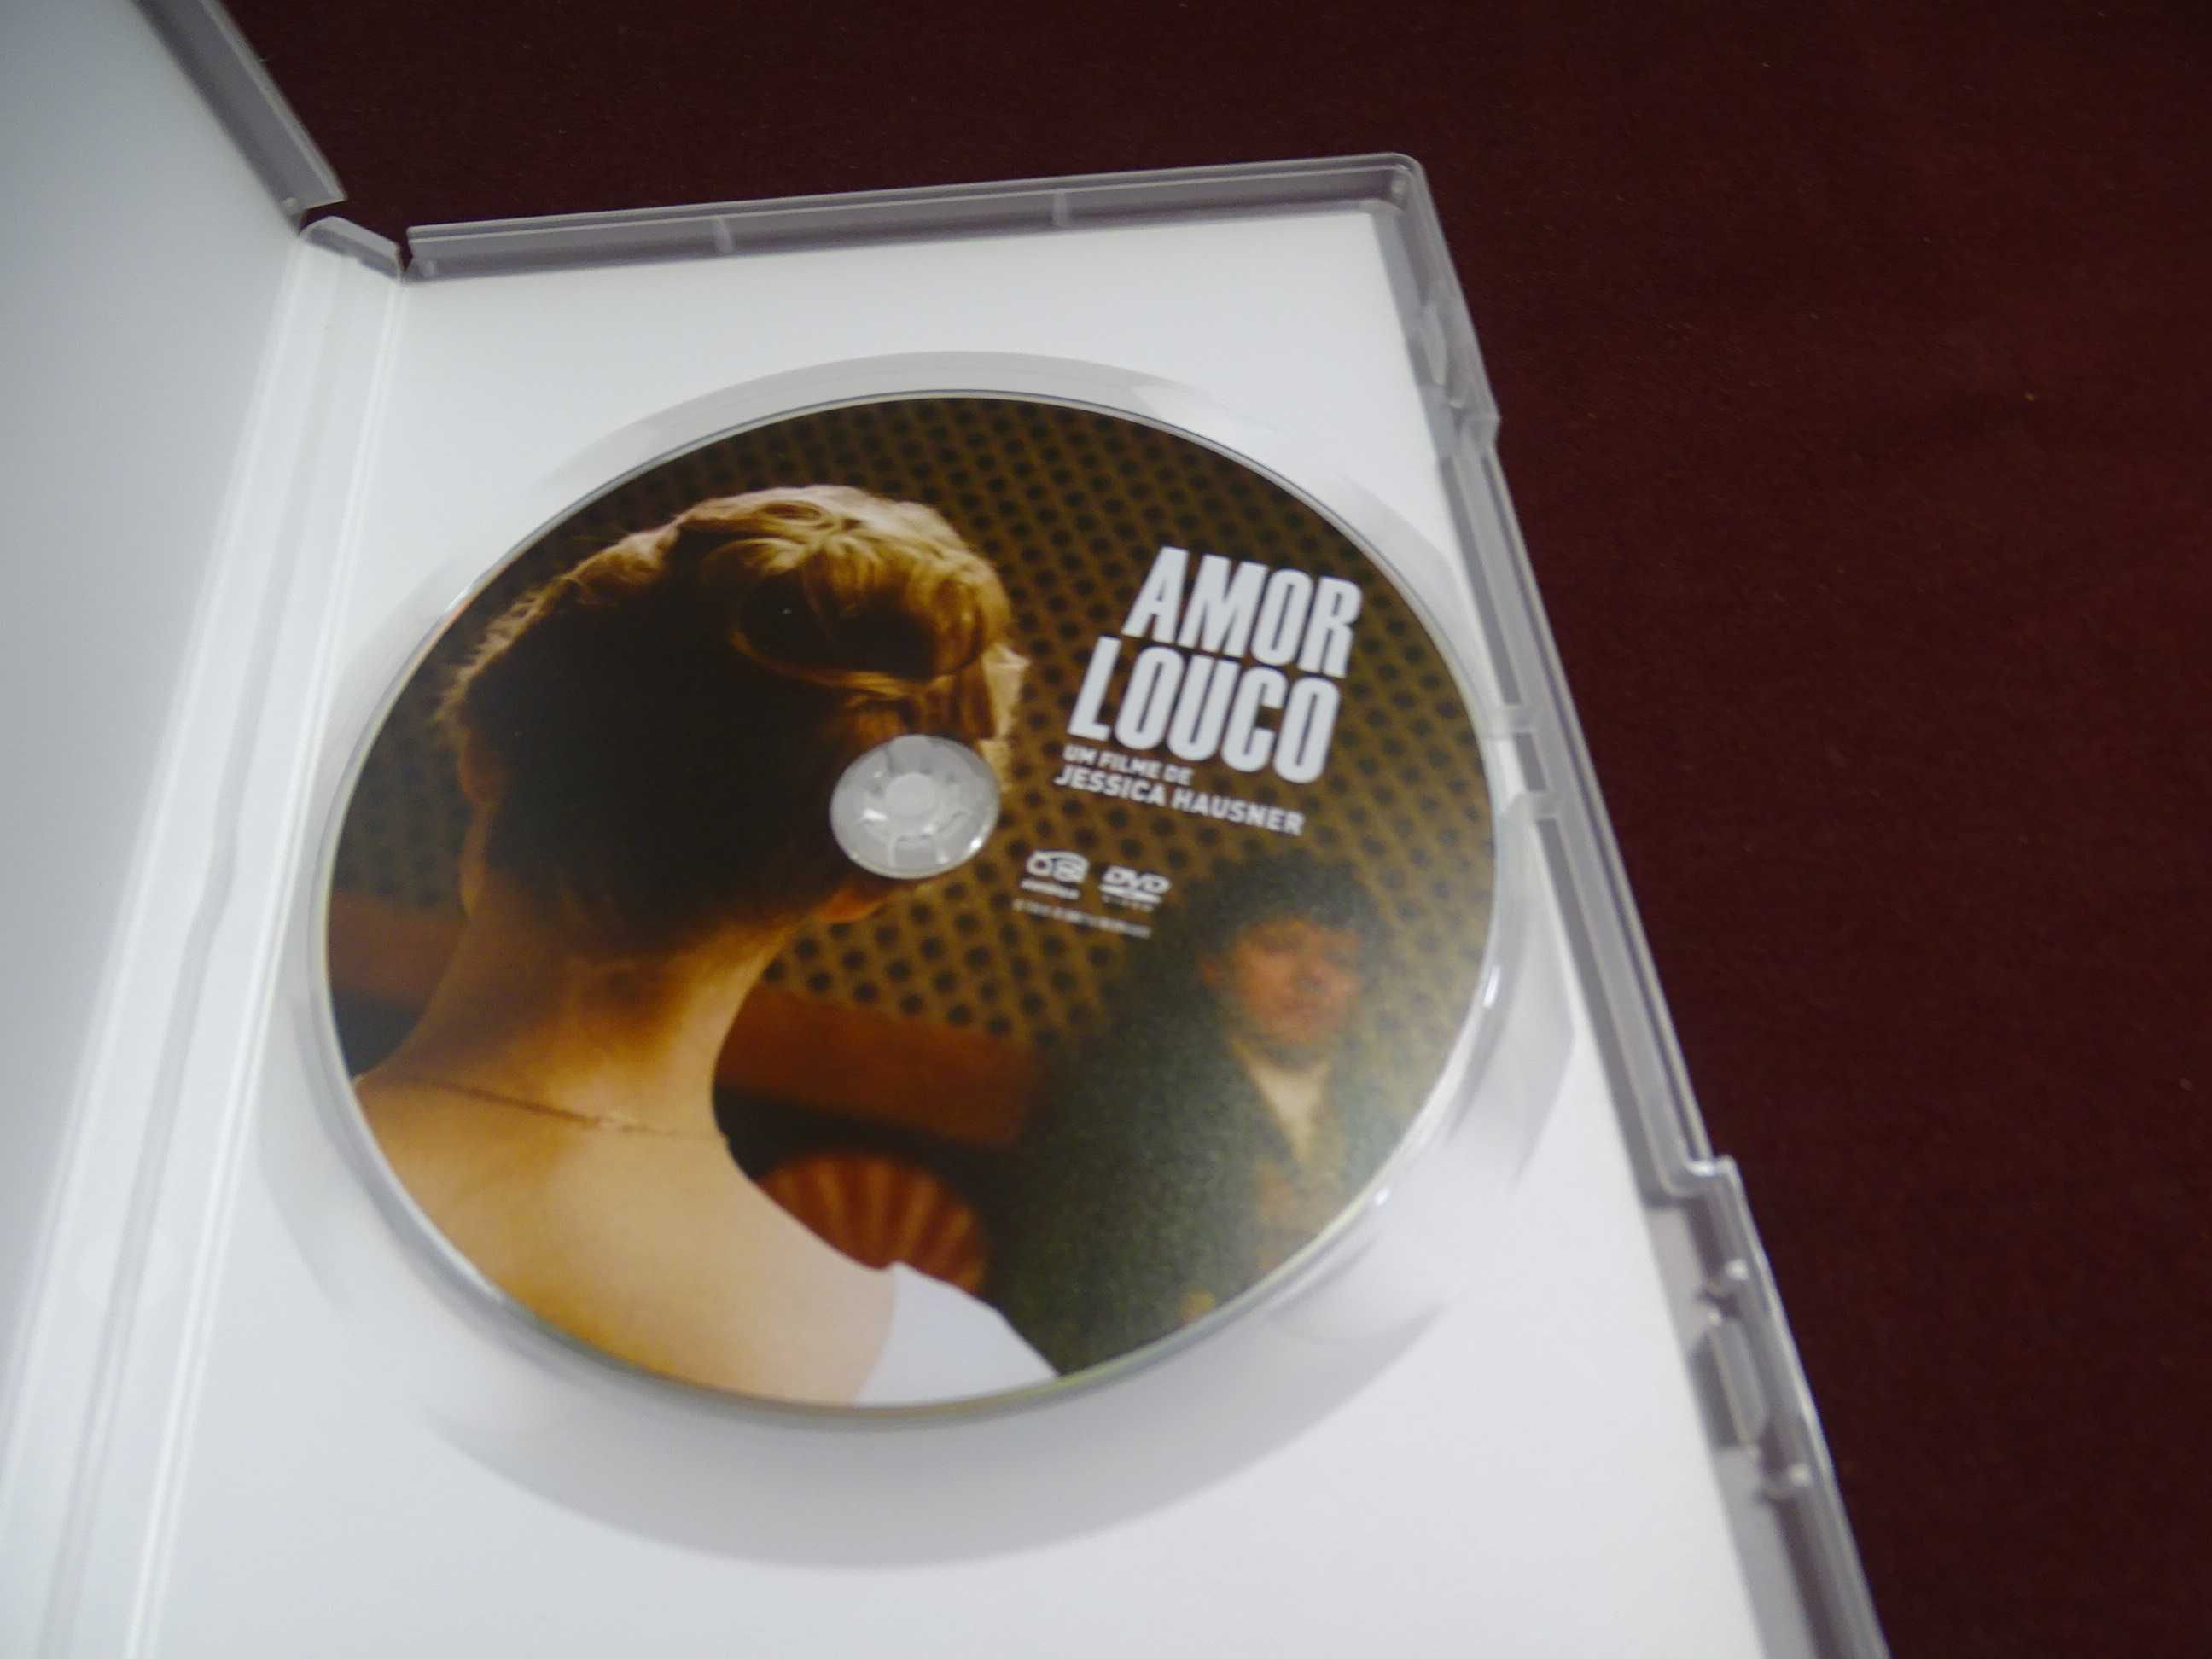 DVD-Amor louco-Jessica Hausner